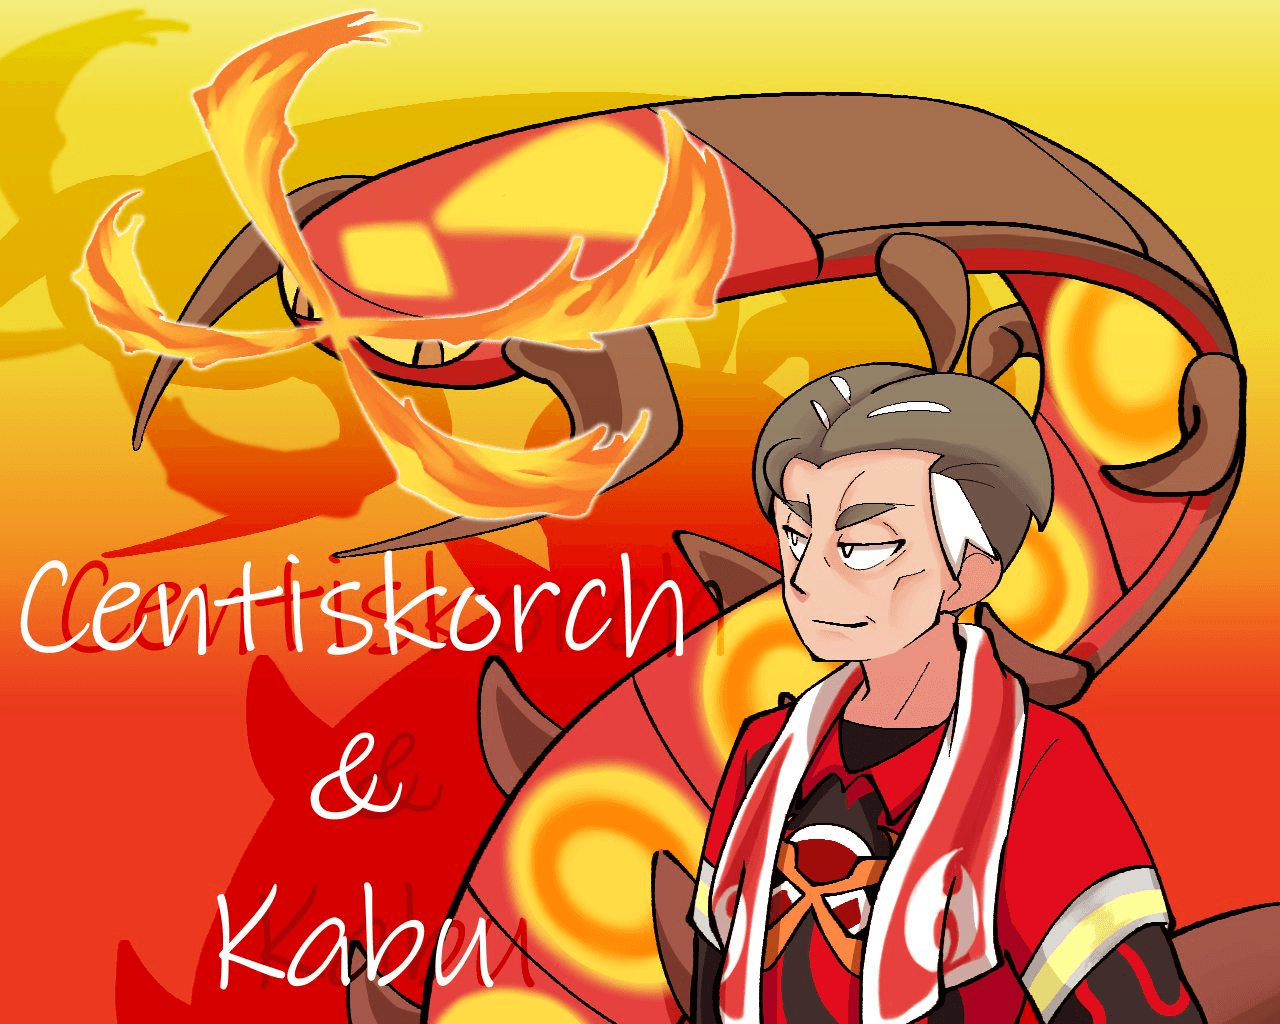 Centiskorch and Kabu